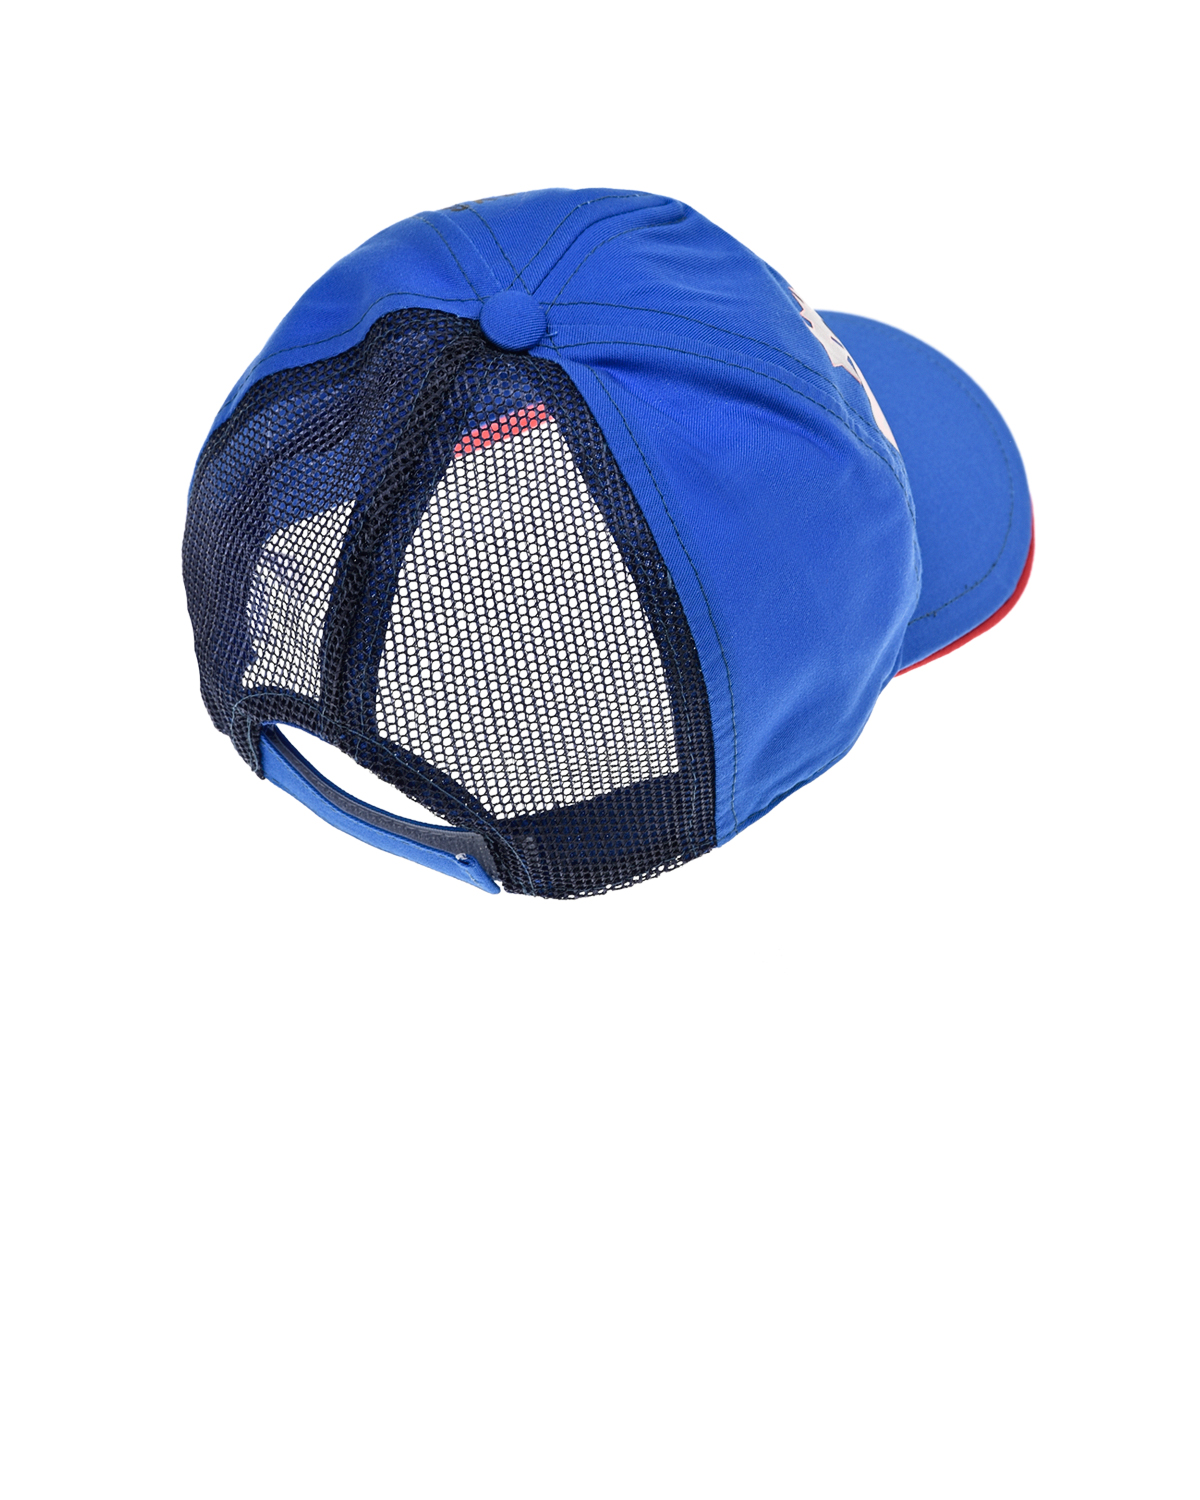 Синяя кепка с надписью "Pretended tend" Il Trenino детская, размер 50, цвет нет цвета - фото 3